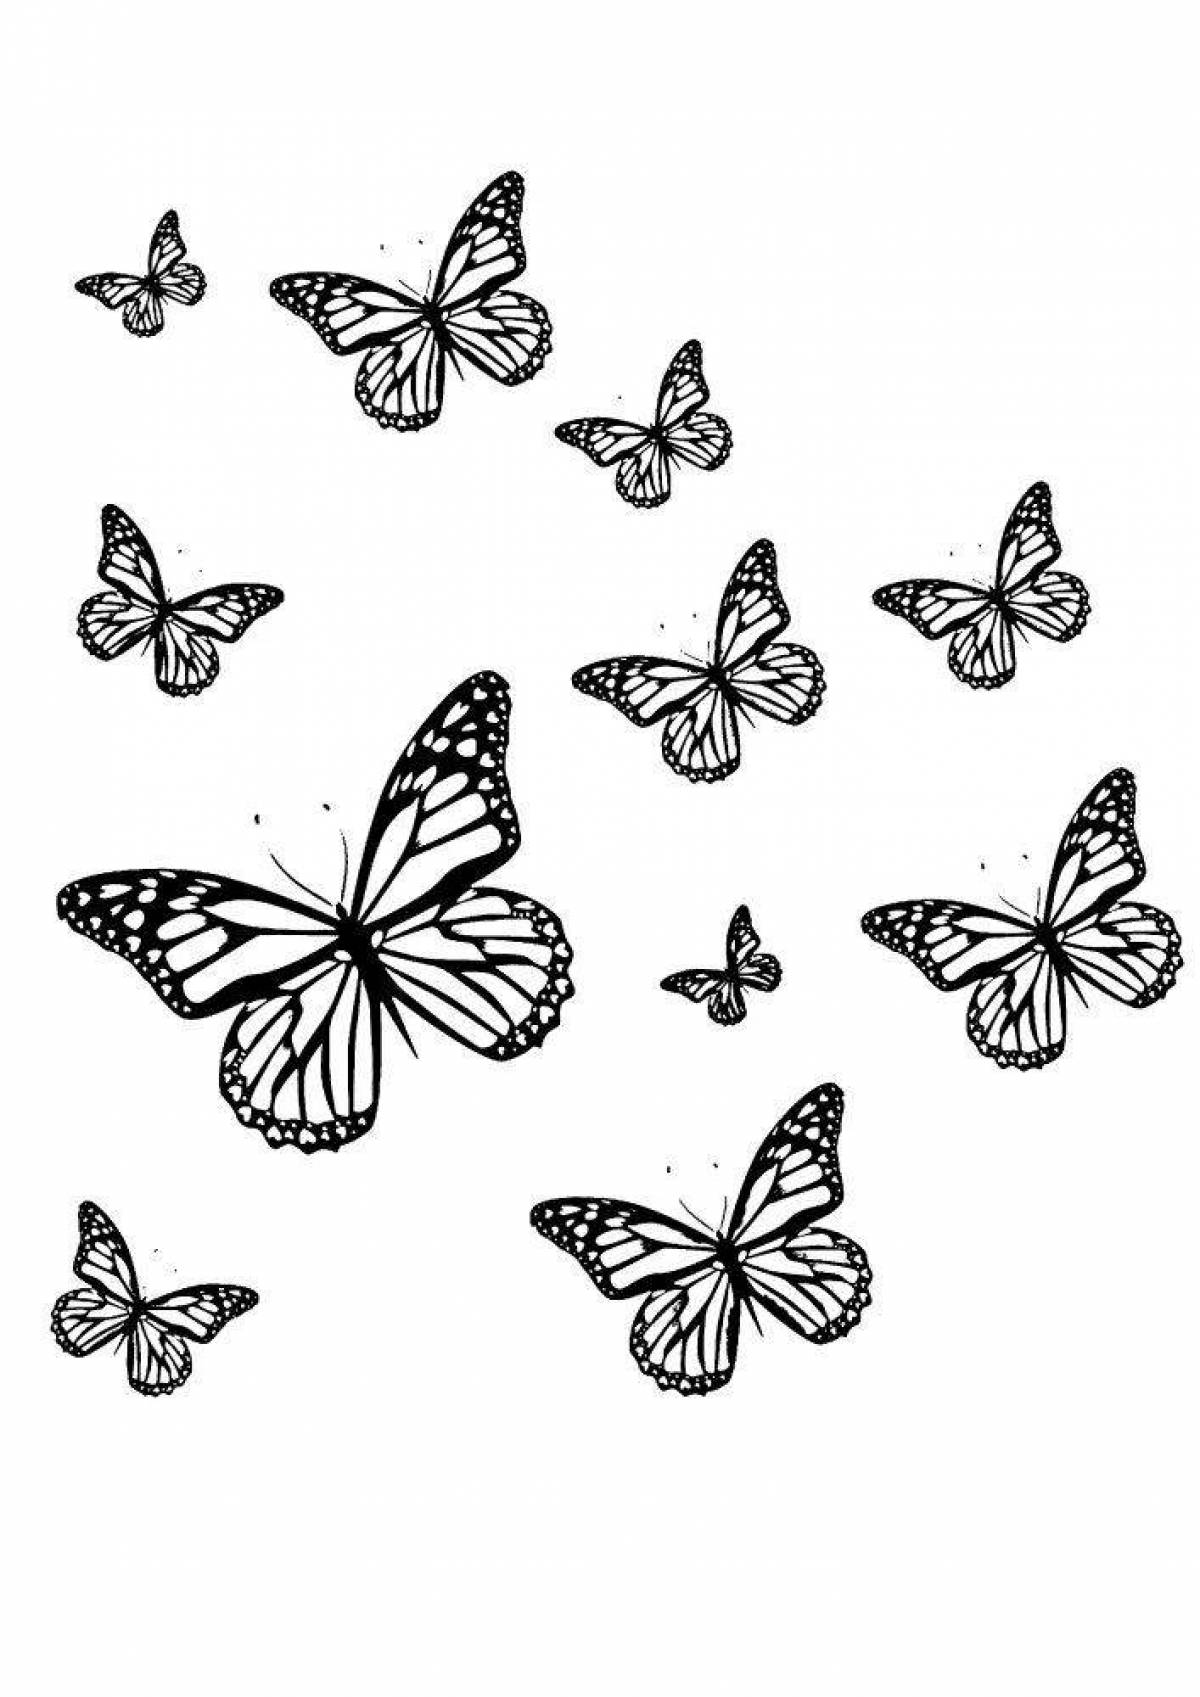 Exquisite butterflies on one sheet